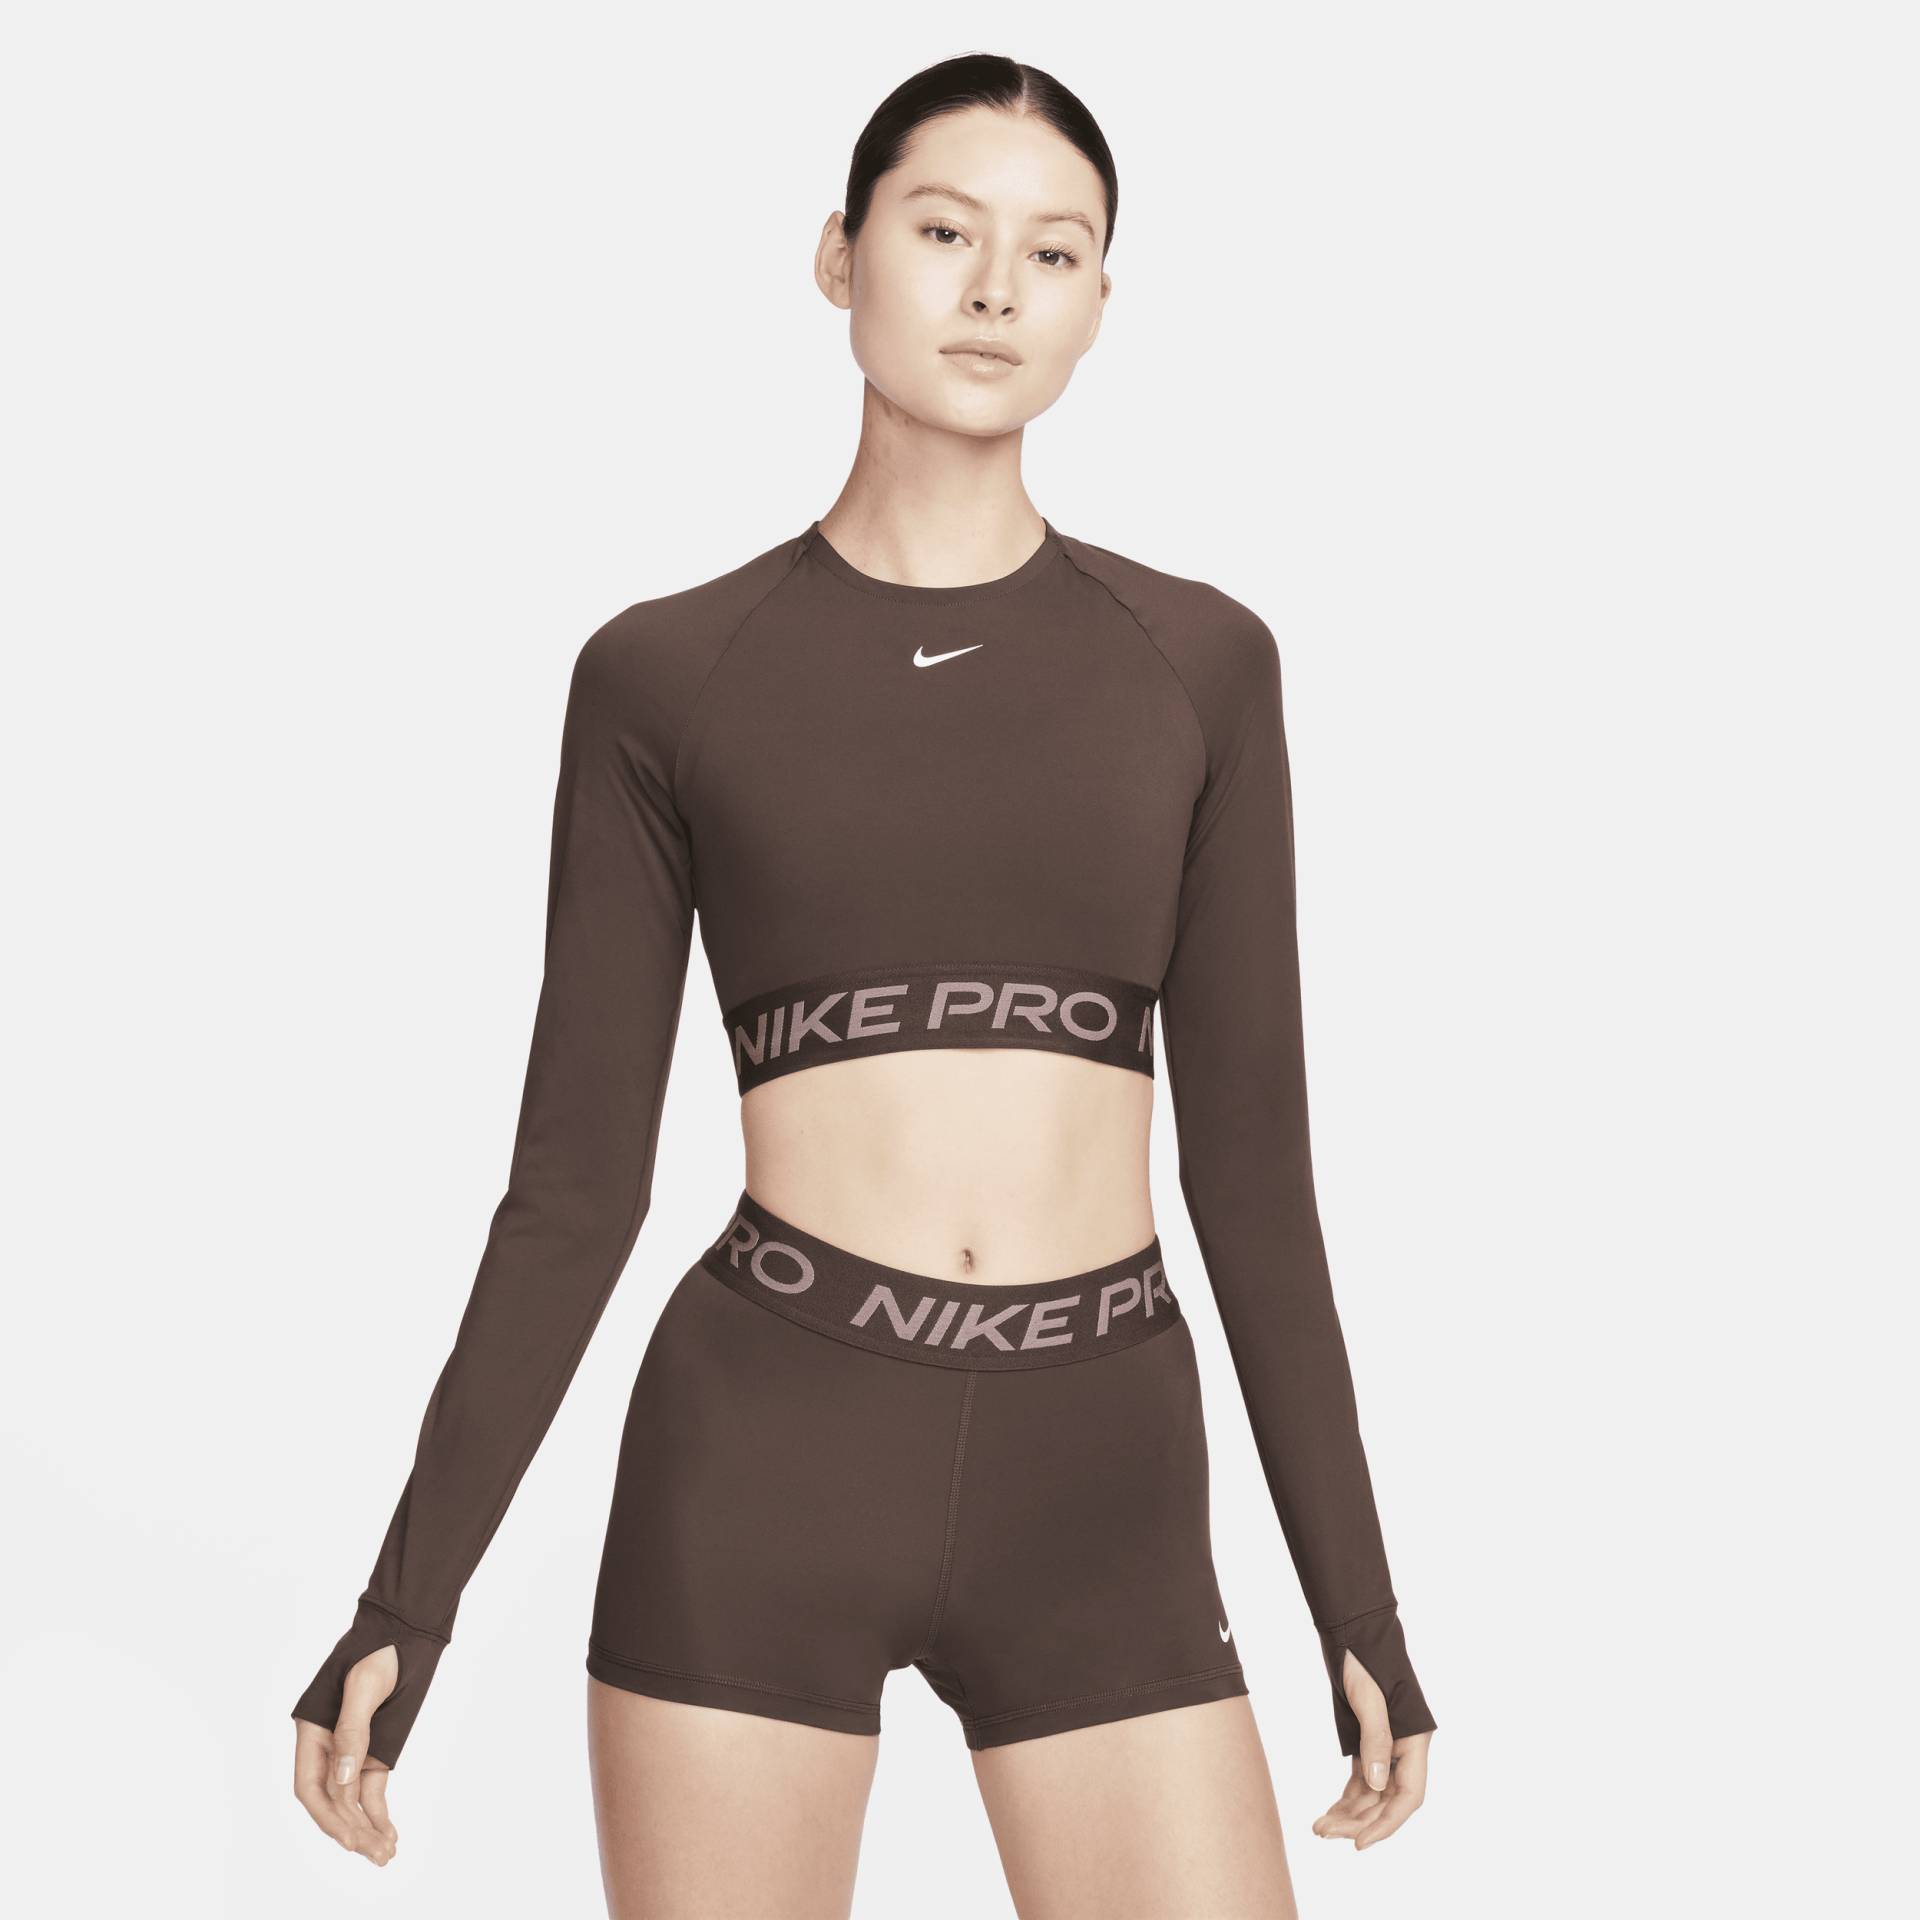 Nike Pro Dri-FIT verkürztes Longsleeve (Damen) - Braun von Nike